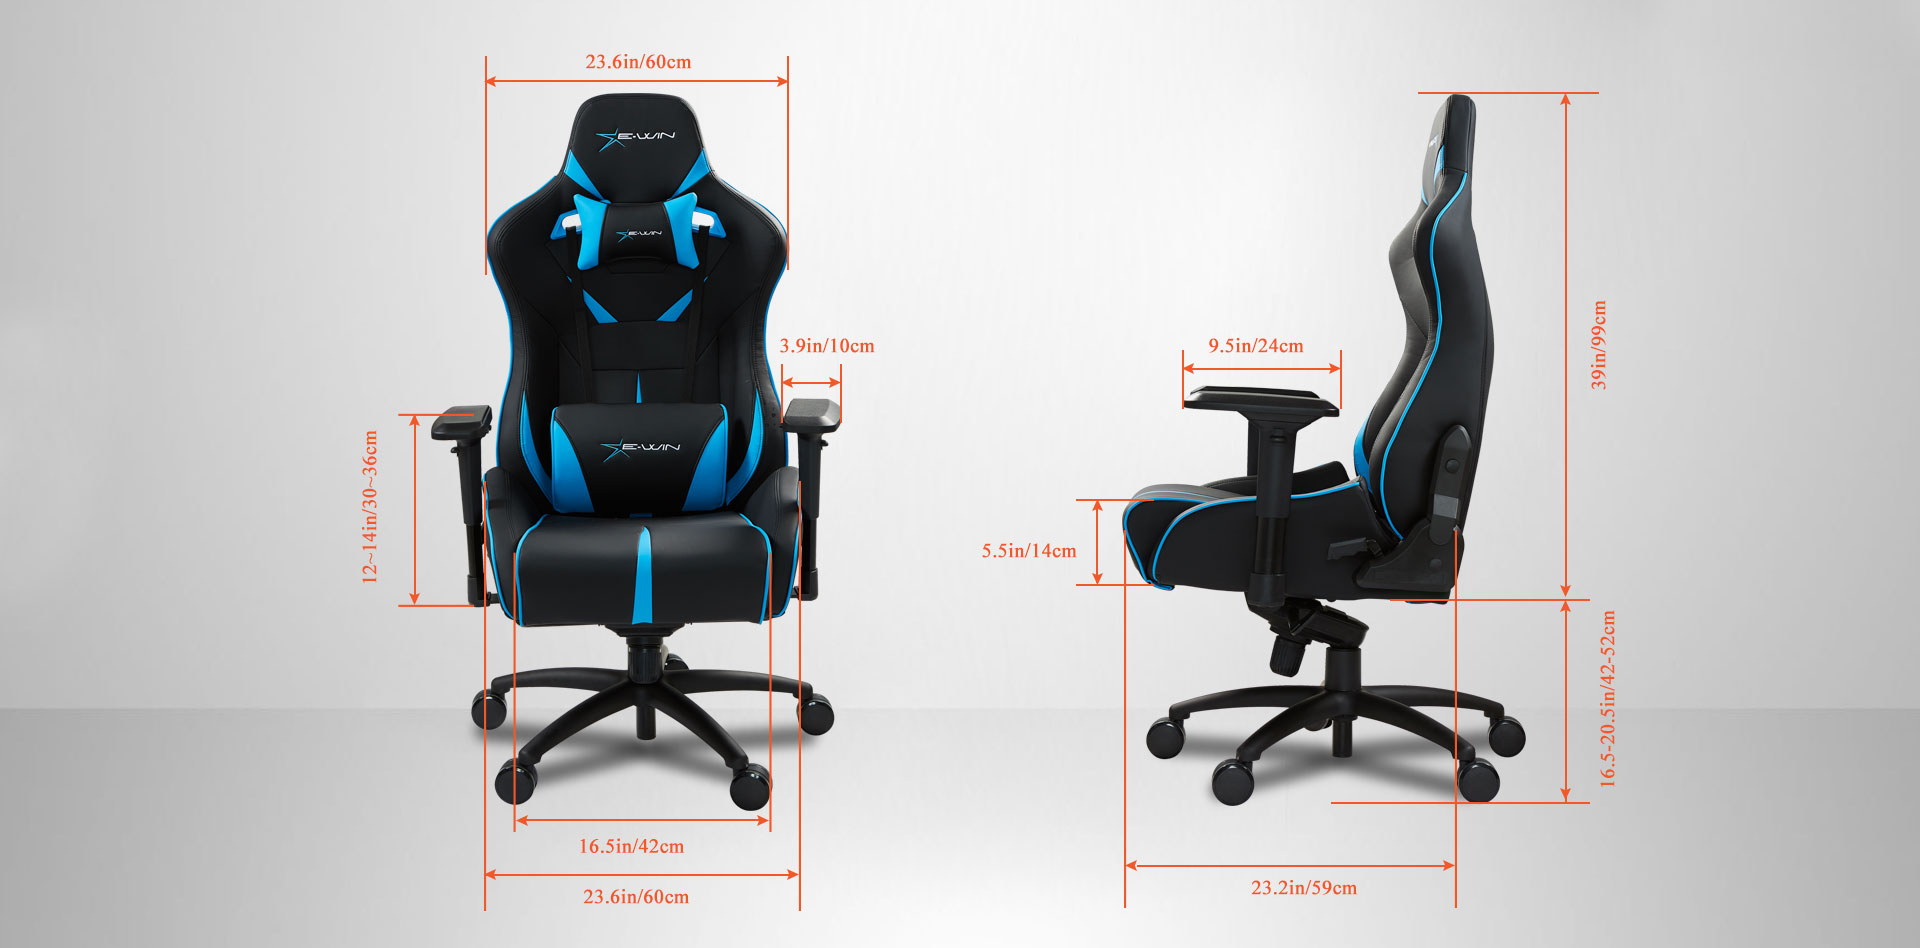 EwinRacing Flash XL Gaming Chairs Dimensions